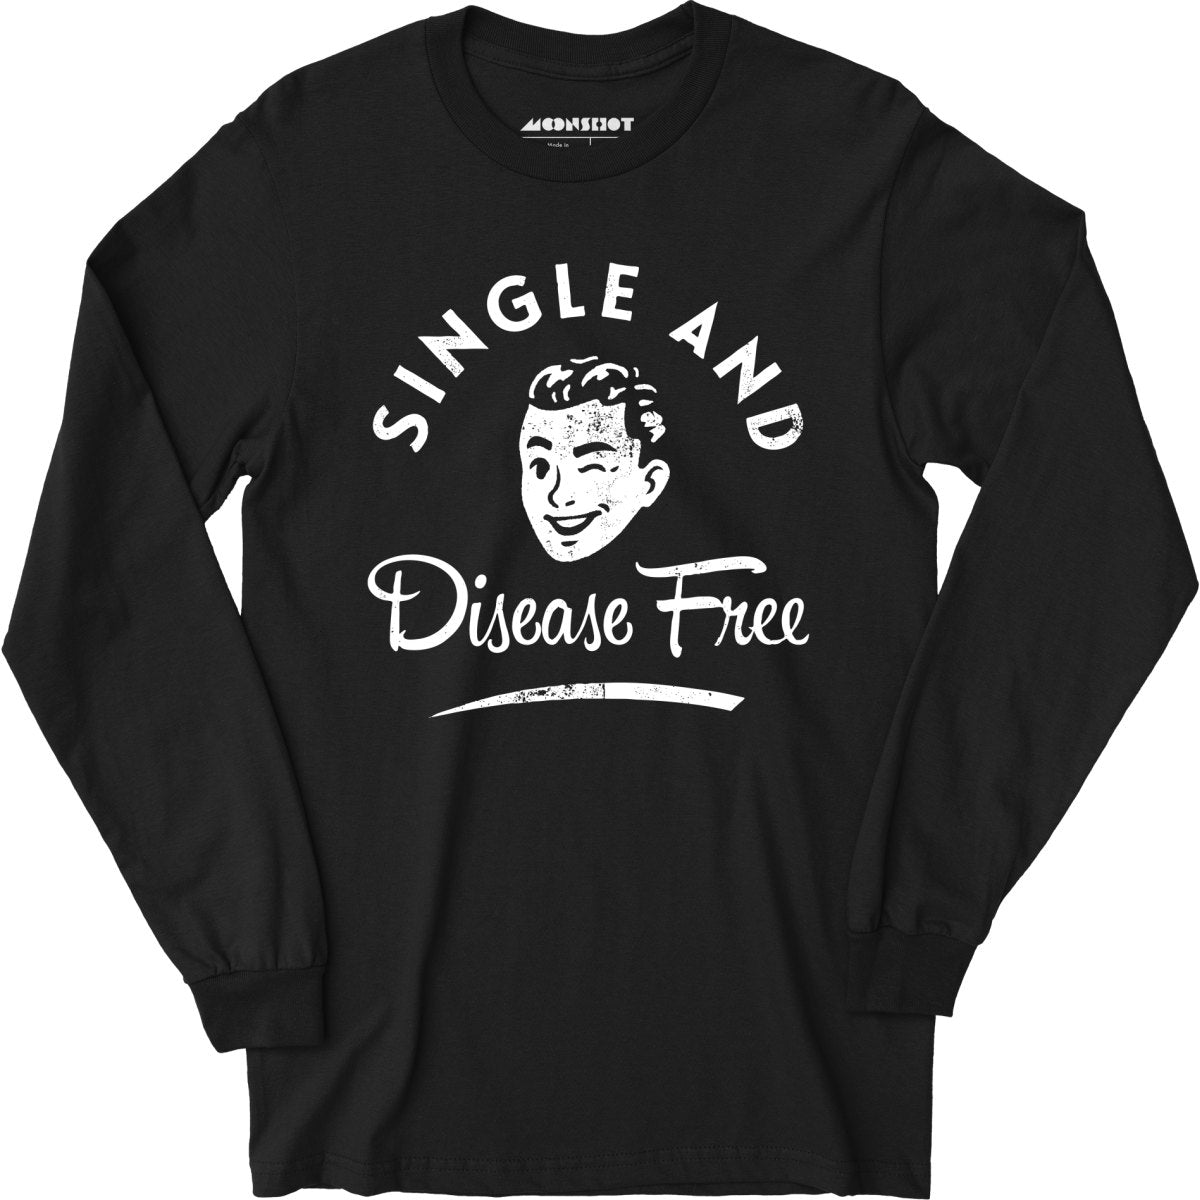 Single and Disease Free - Long Sleeve T-Shirt